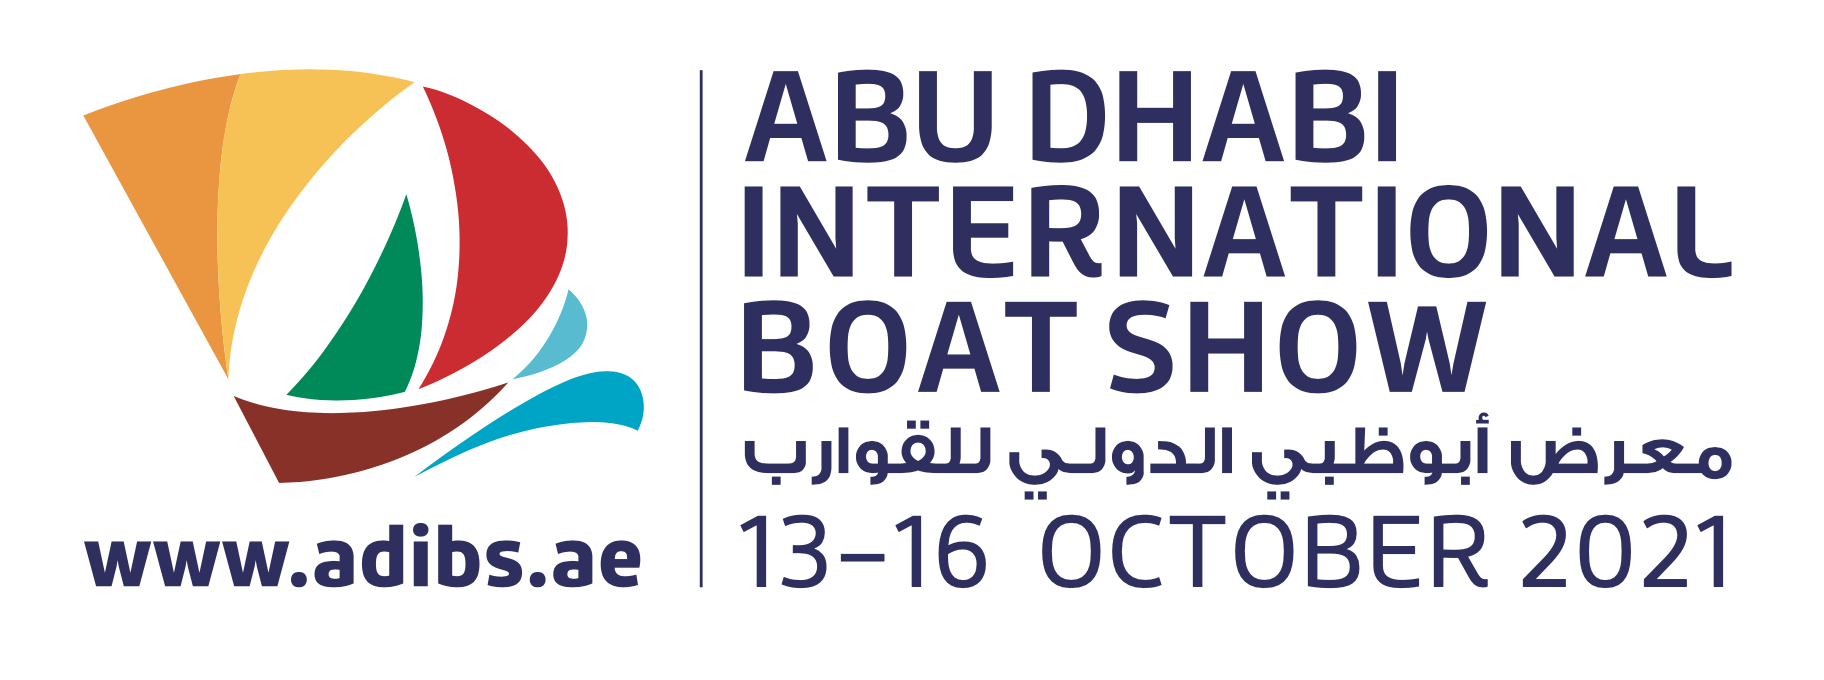 Abu Dhabi International Boat Show (ADIBS) 2021, Abu Dhabi, United Arab Emirates